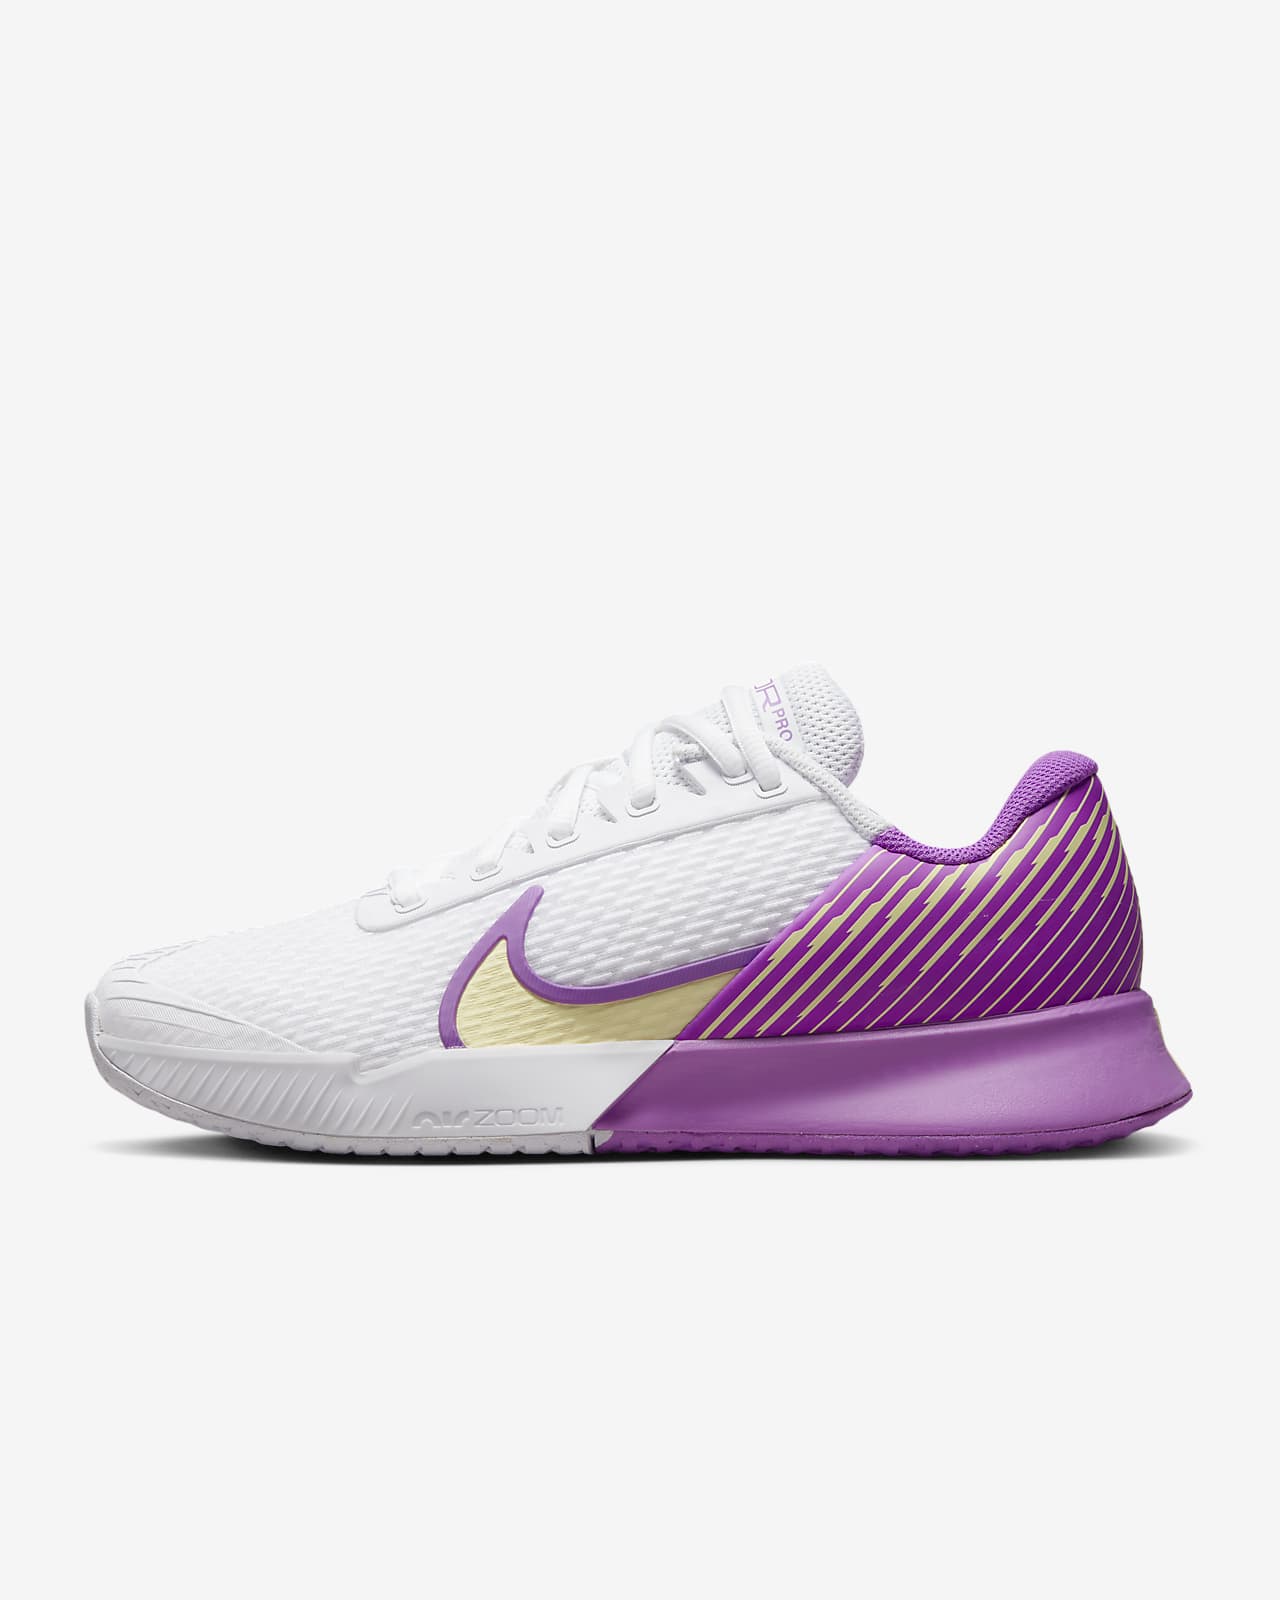 NikeCourt Air Zoom Vapor Pro 2 女款硬地球場網球鞋